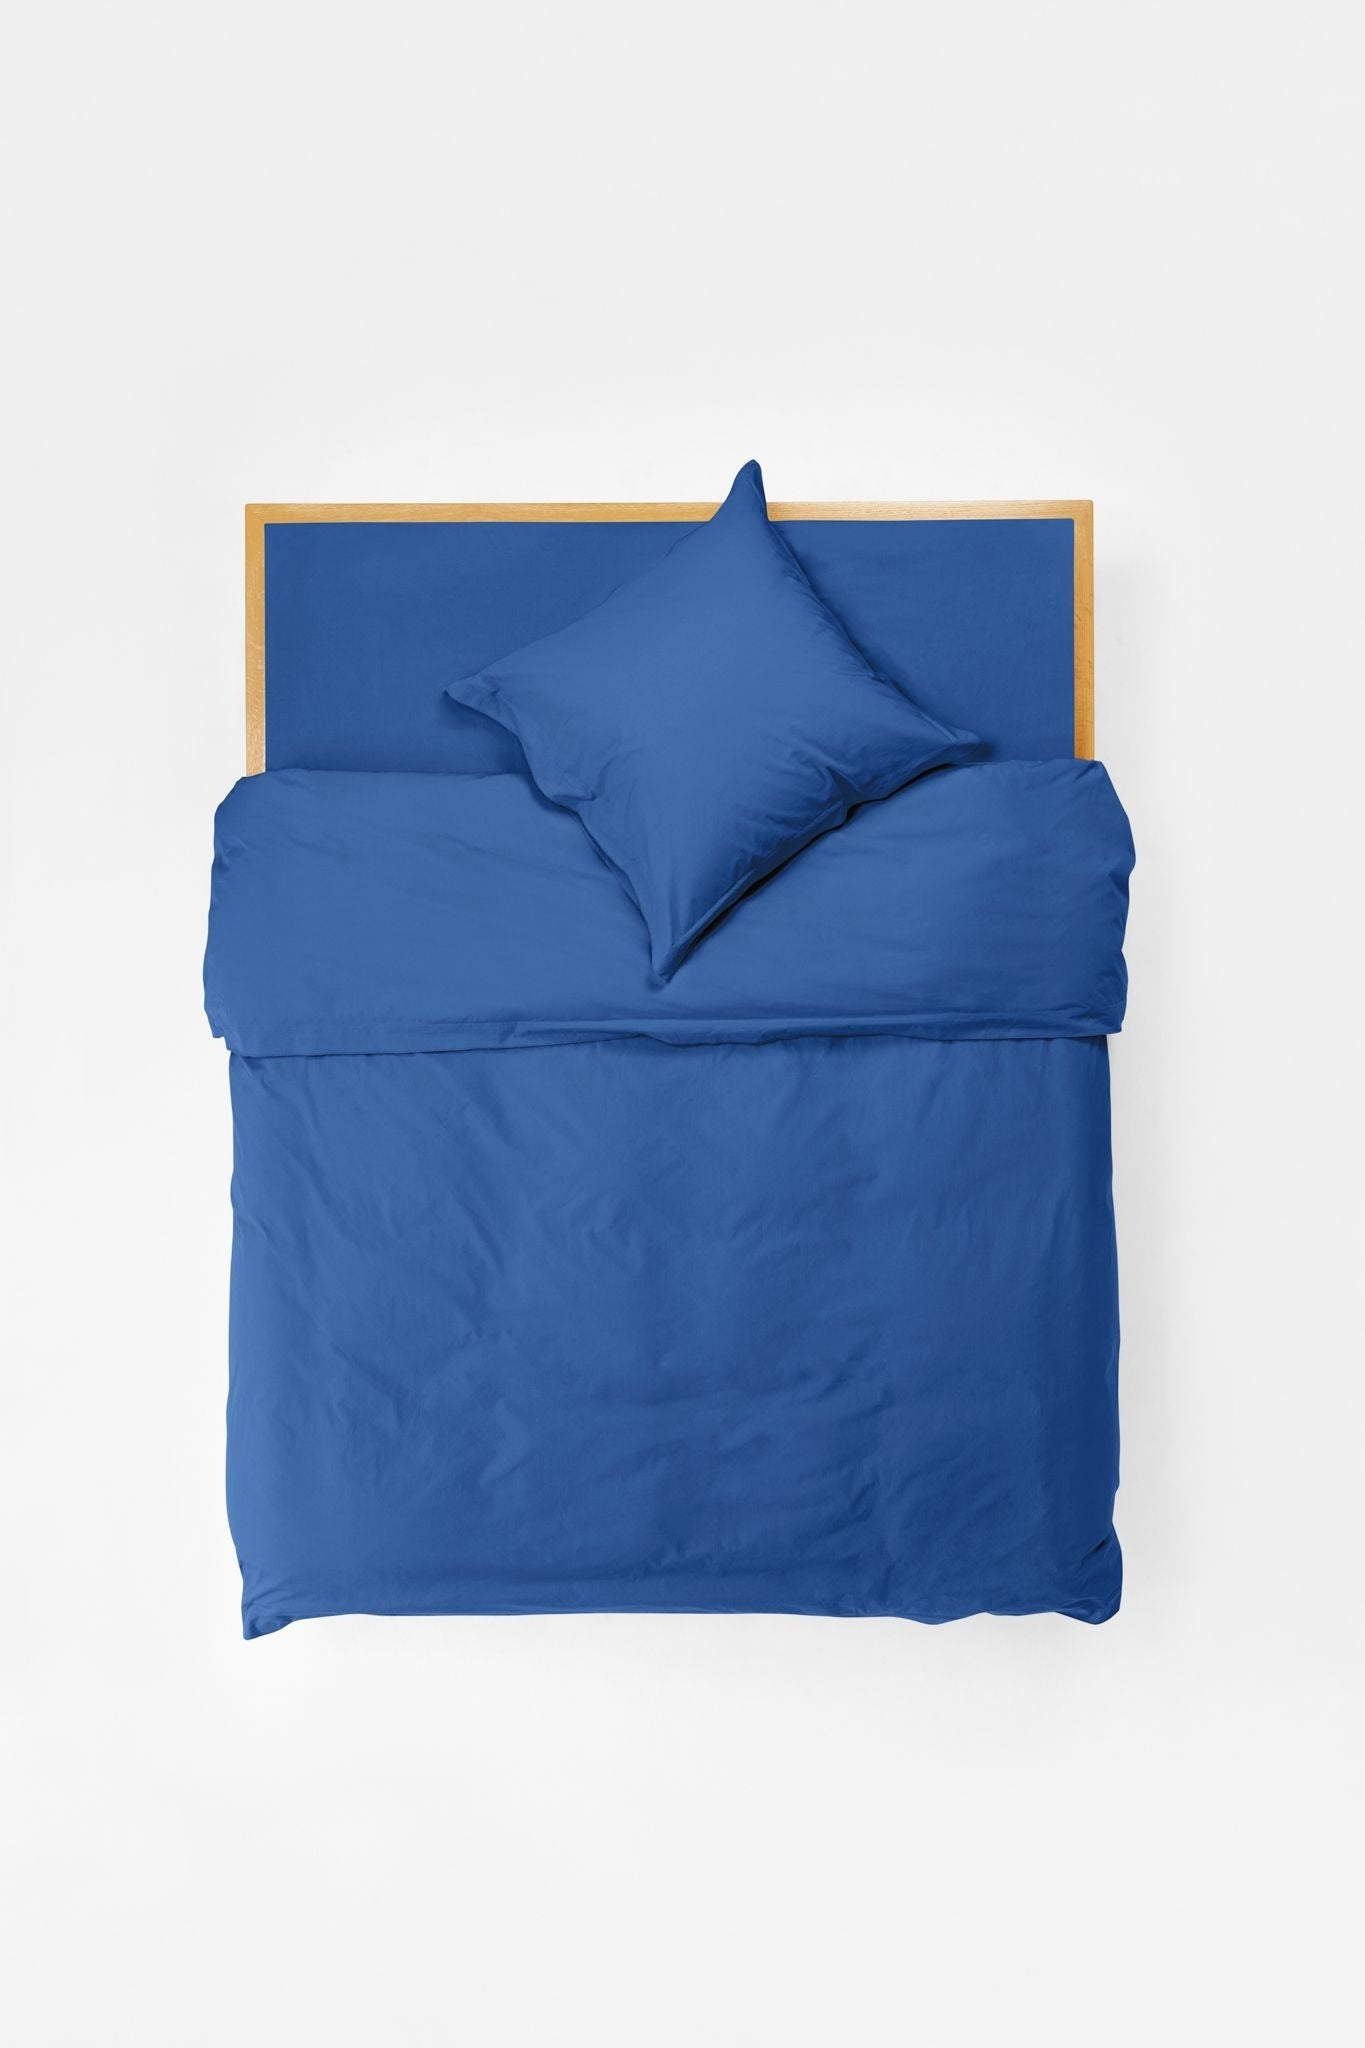 Mono Organic Cotton Percale Pillow Pair - Blue Blue Pillows in Euro Pillow